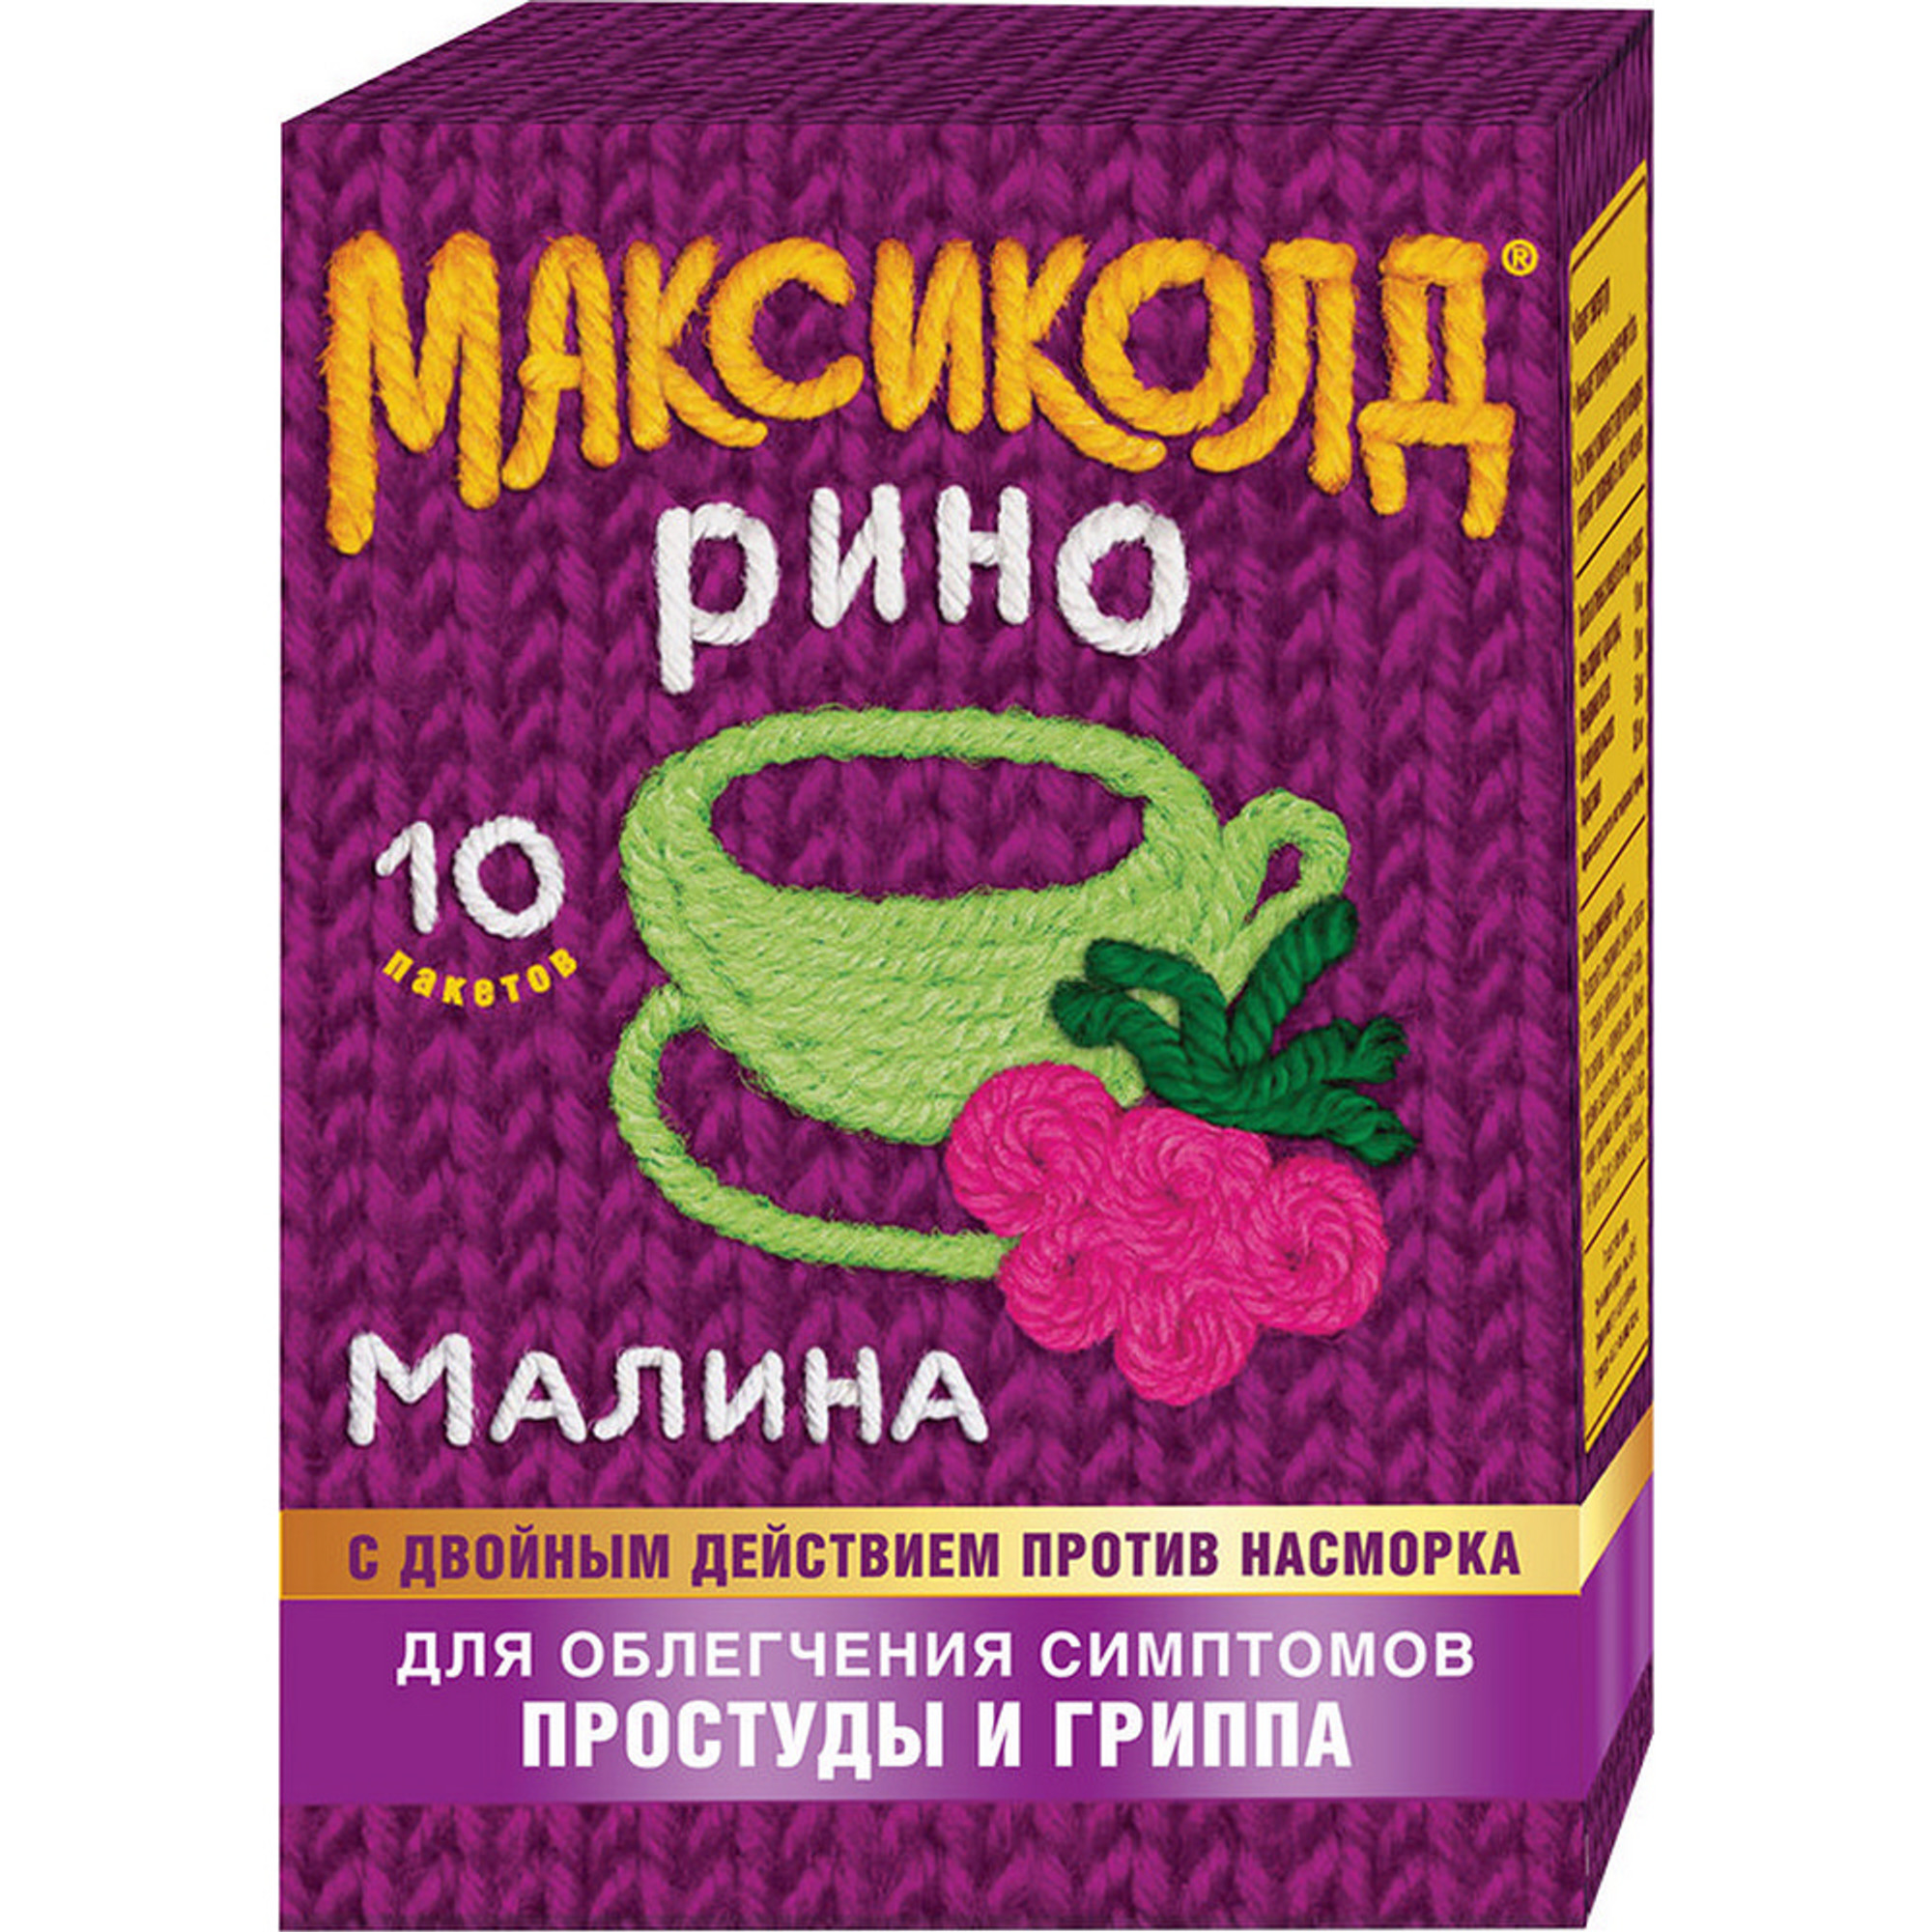 Максиколд Рино, порошок (малина), пакетики 15 г, 10 шт. максиколд рино пор пак малина 10